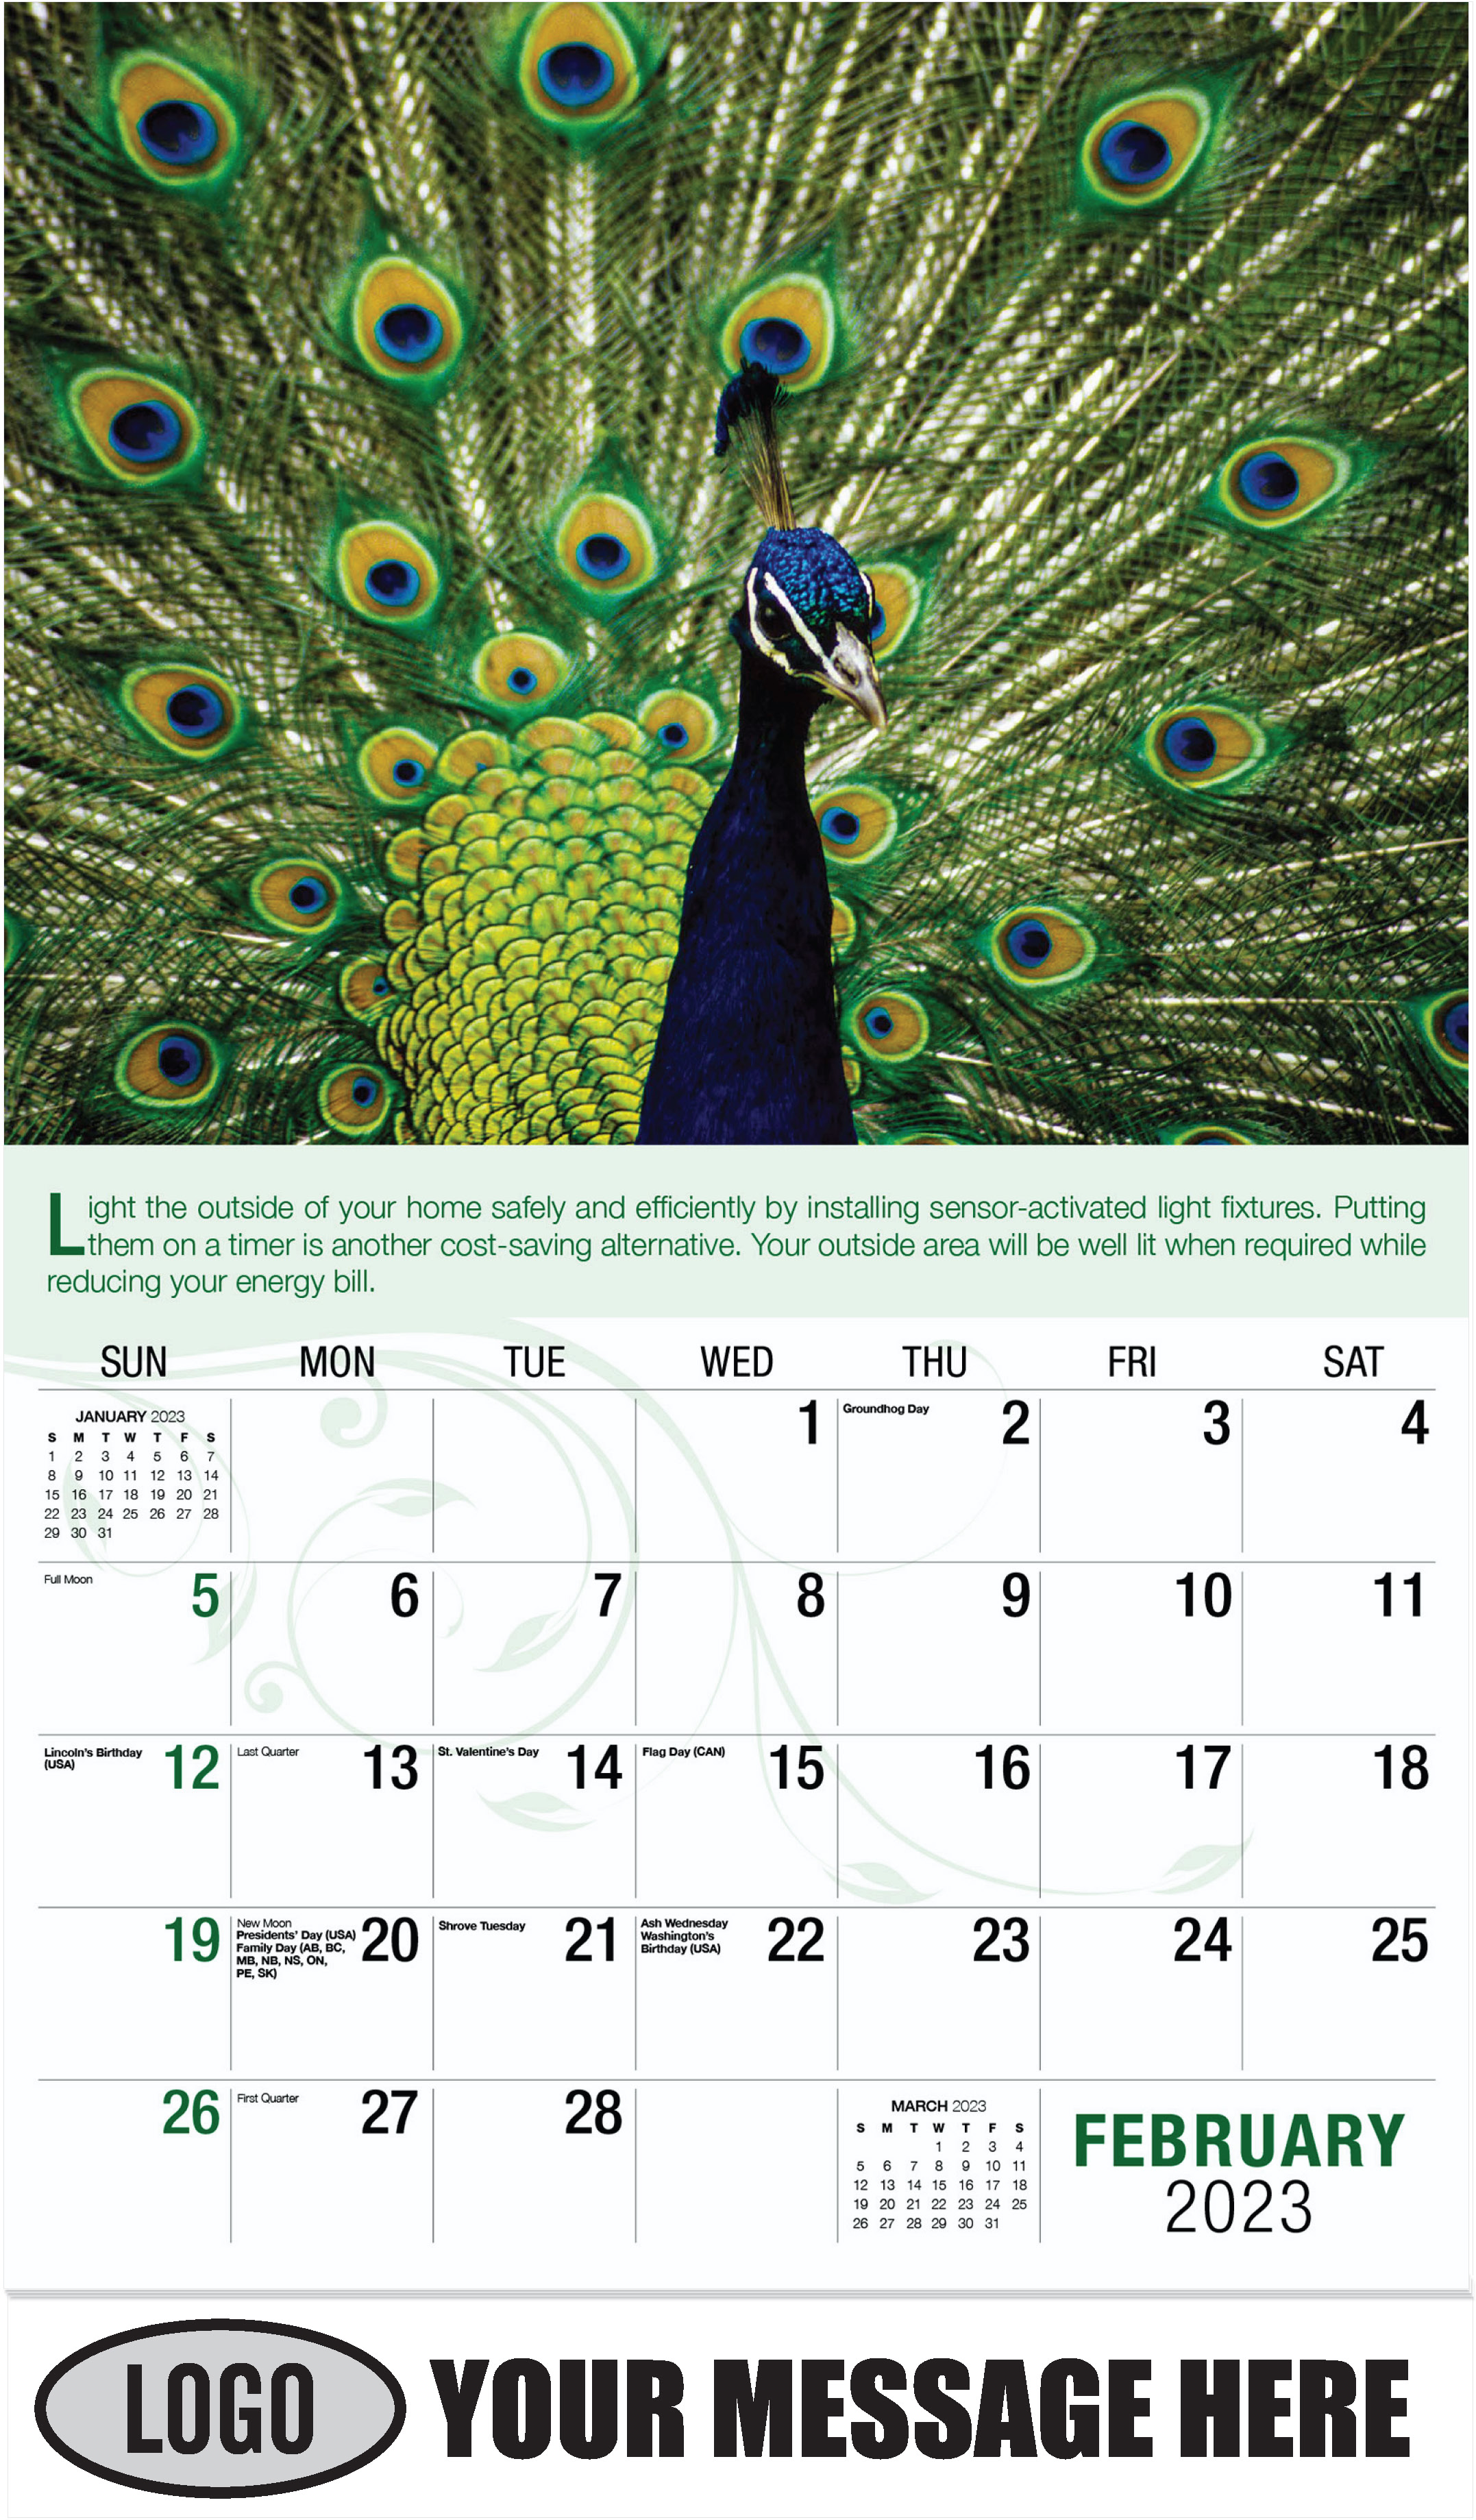 Indian Peacock - February - Go Green 2023 Promotional Calendar